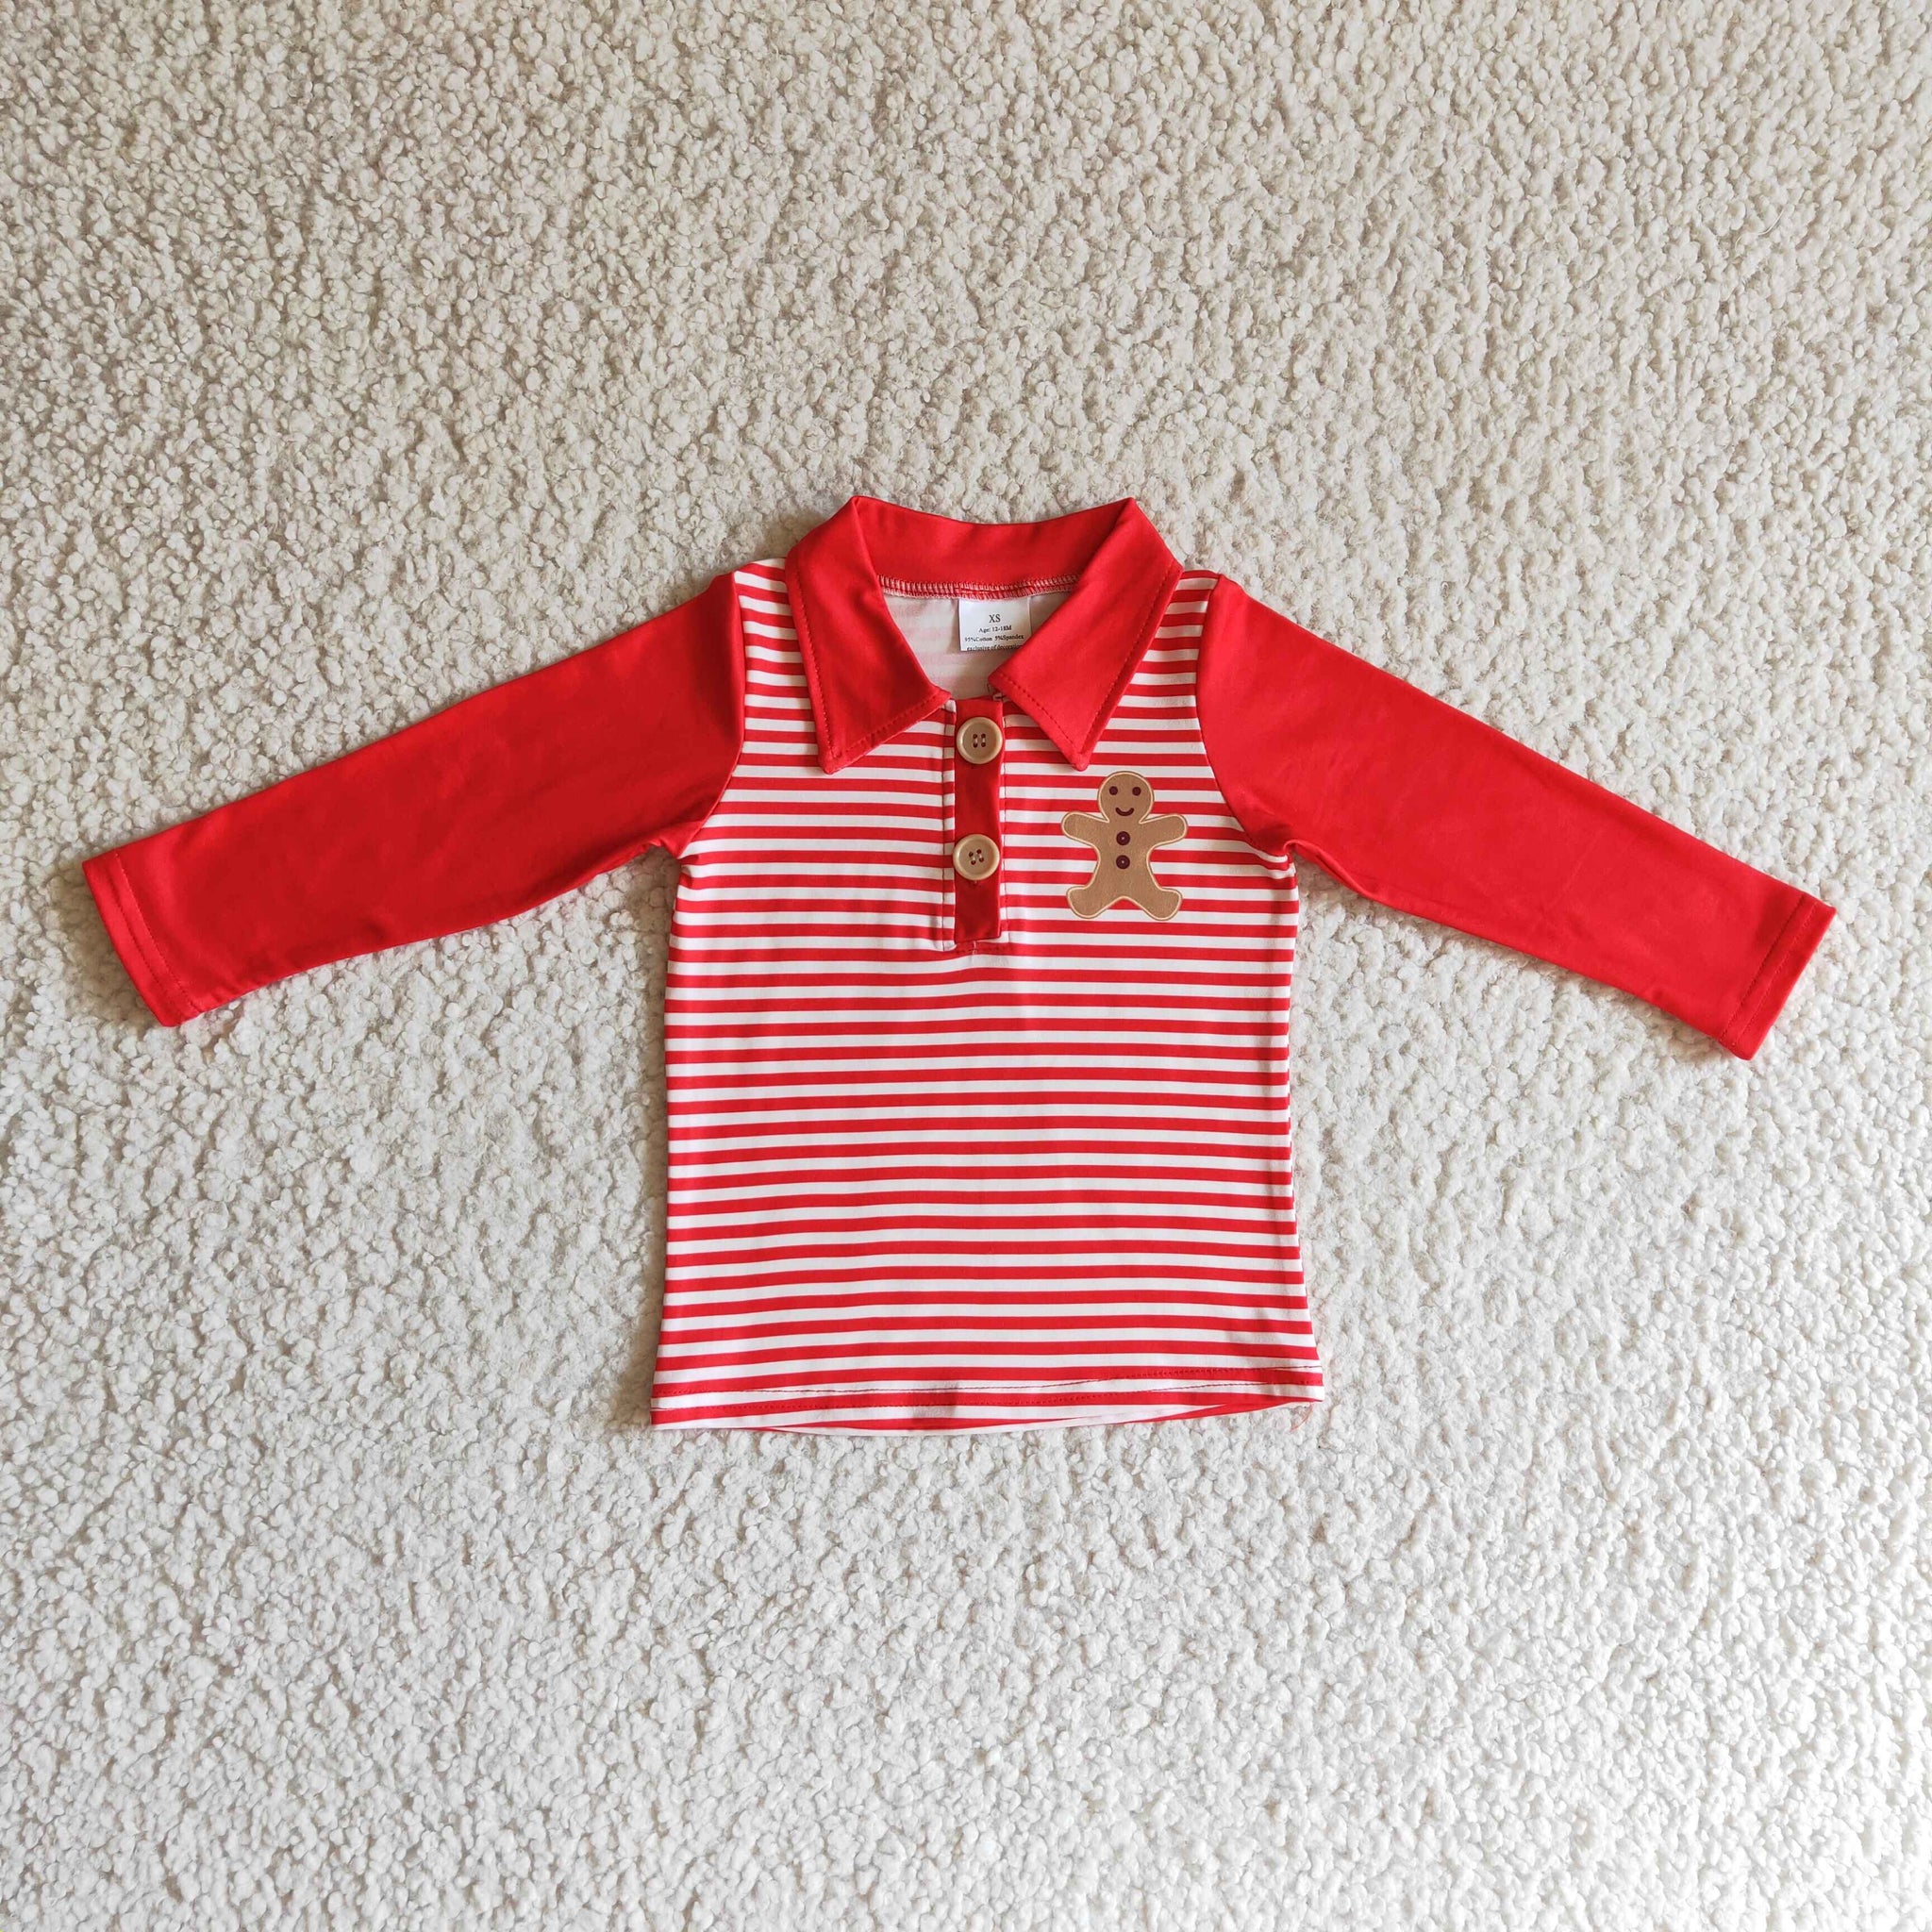 BT0040 kids clothes boys red stripe shirt